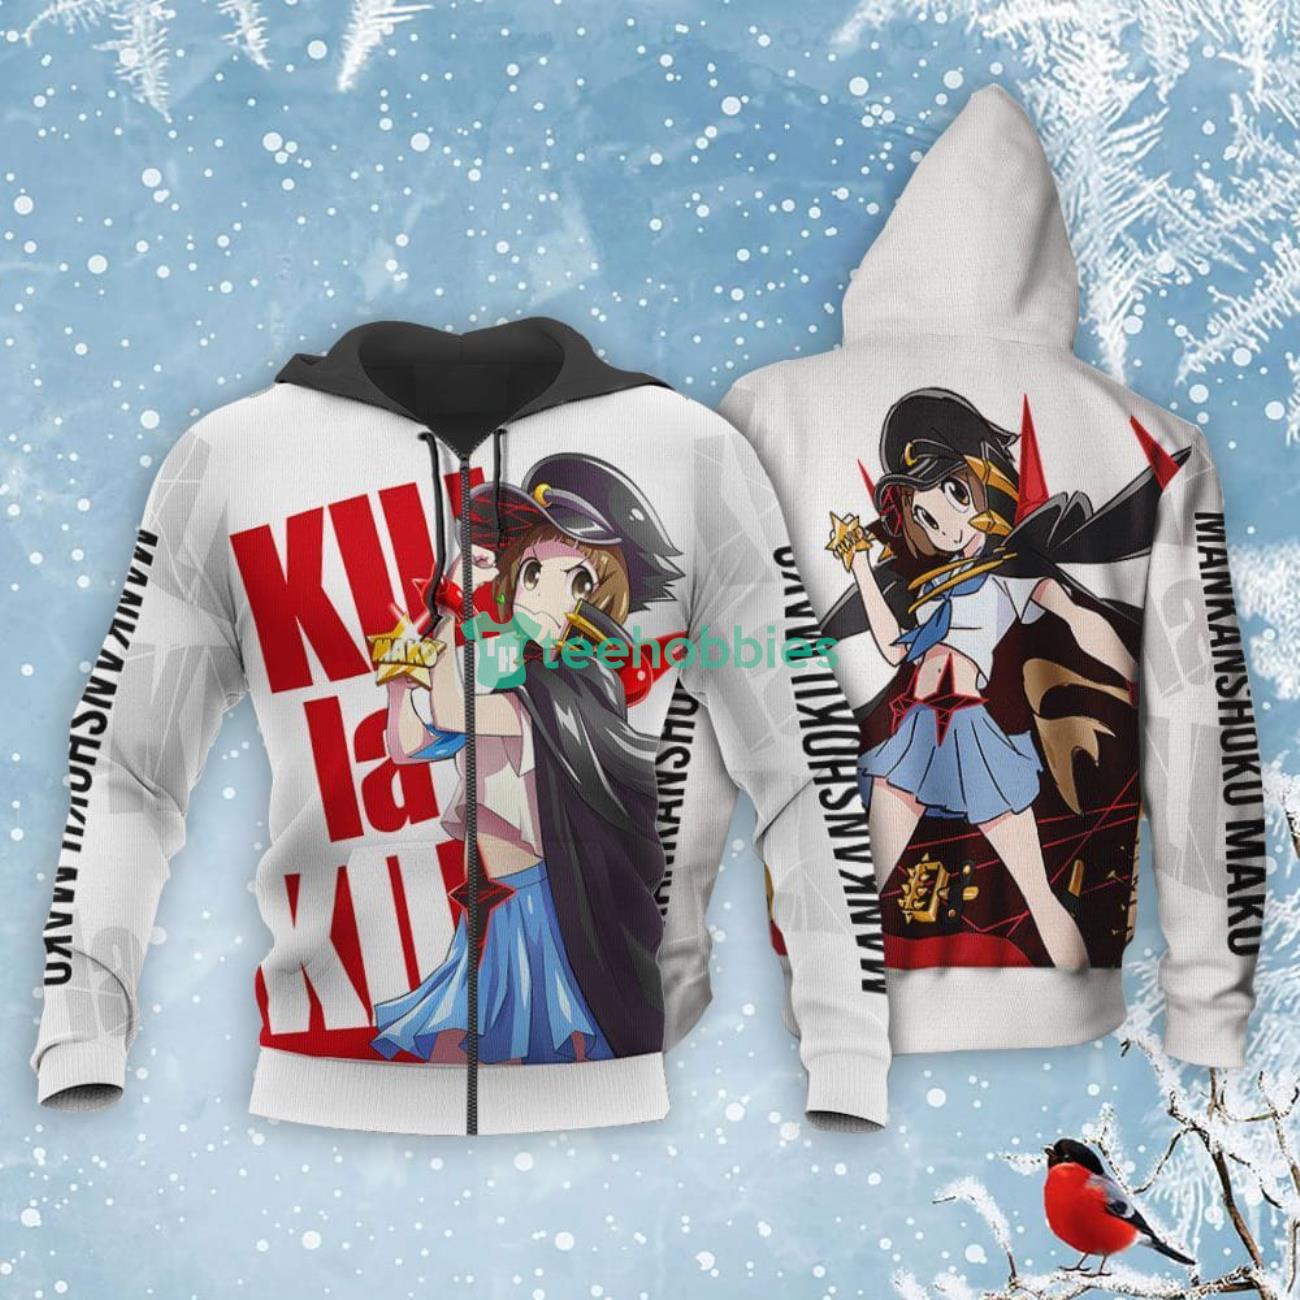 Kill La Kill Mankanshoku Mako All Over Printed 3D Shirt Anime Fans Product Photo 1 Product photo 1